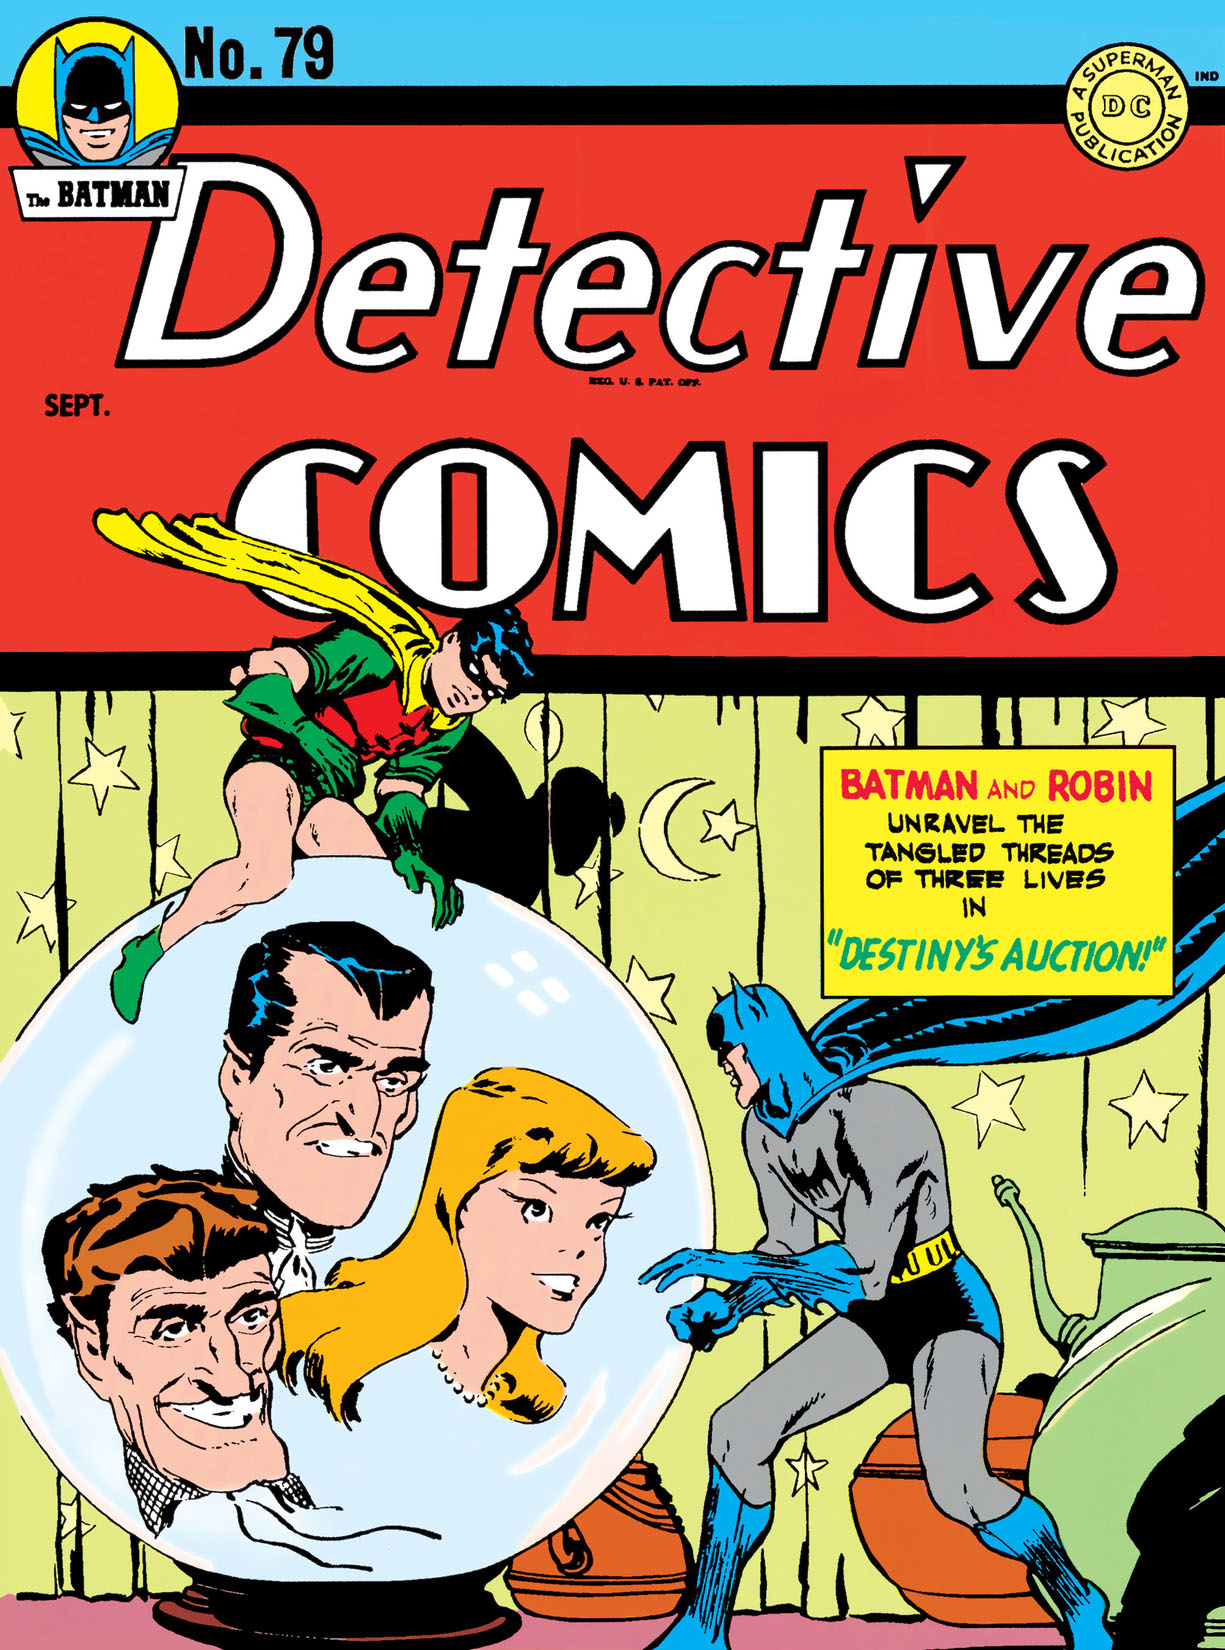 Detective Comics (1942-) #79 preview images